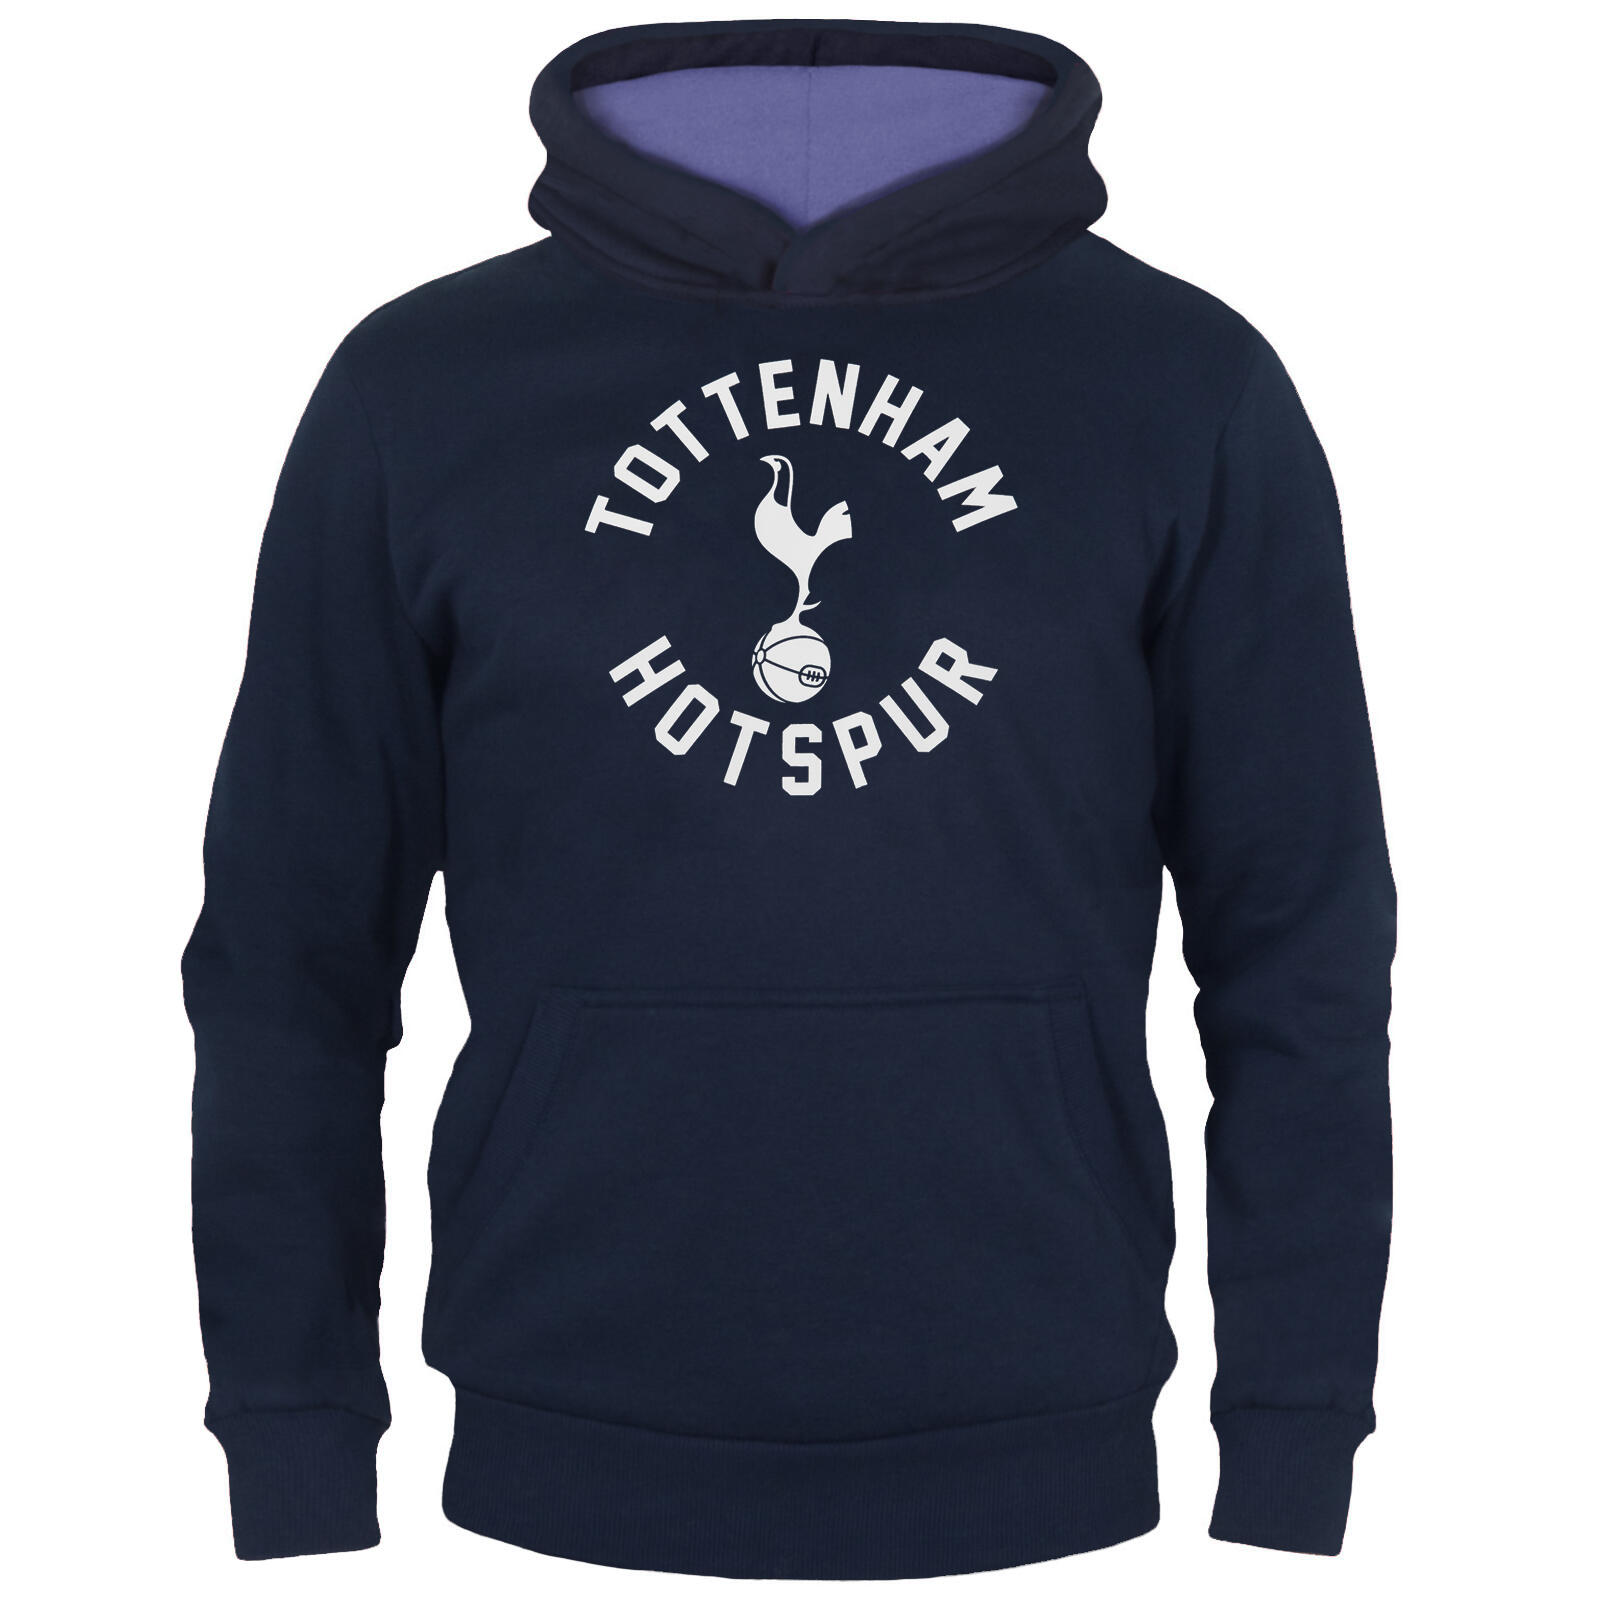 TOTTENHAM HOTSPUR Tottenham Hotspur Boys Hoody Fleece Graphic Kids OFFICIAL Football Gift